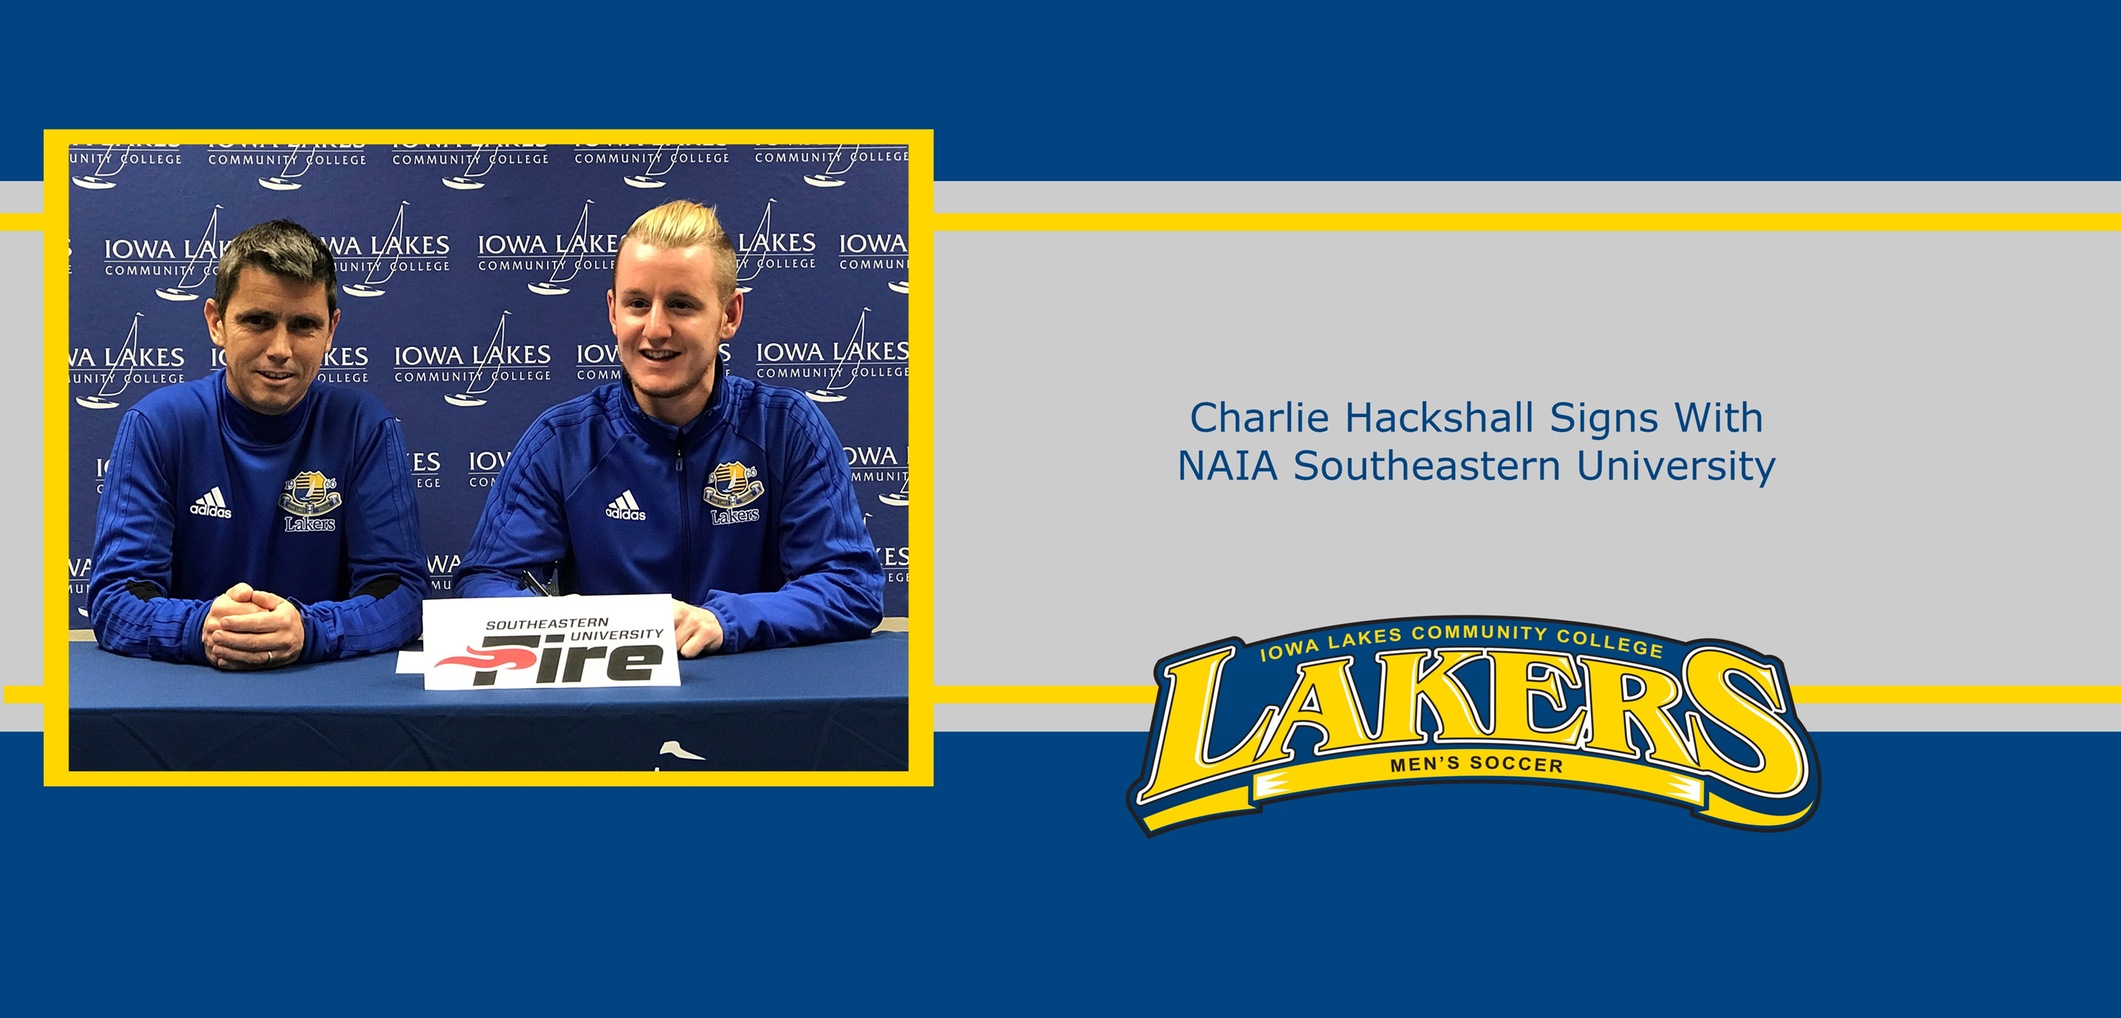 Charlie Hackshall signs with NAIA Southeastern University